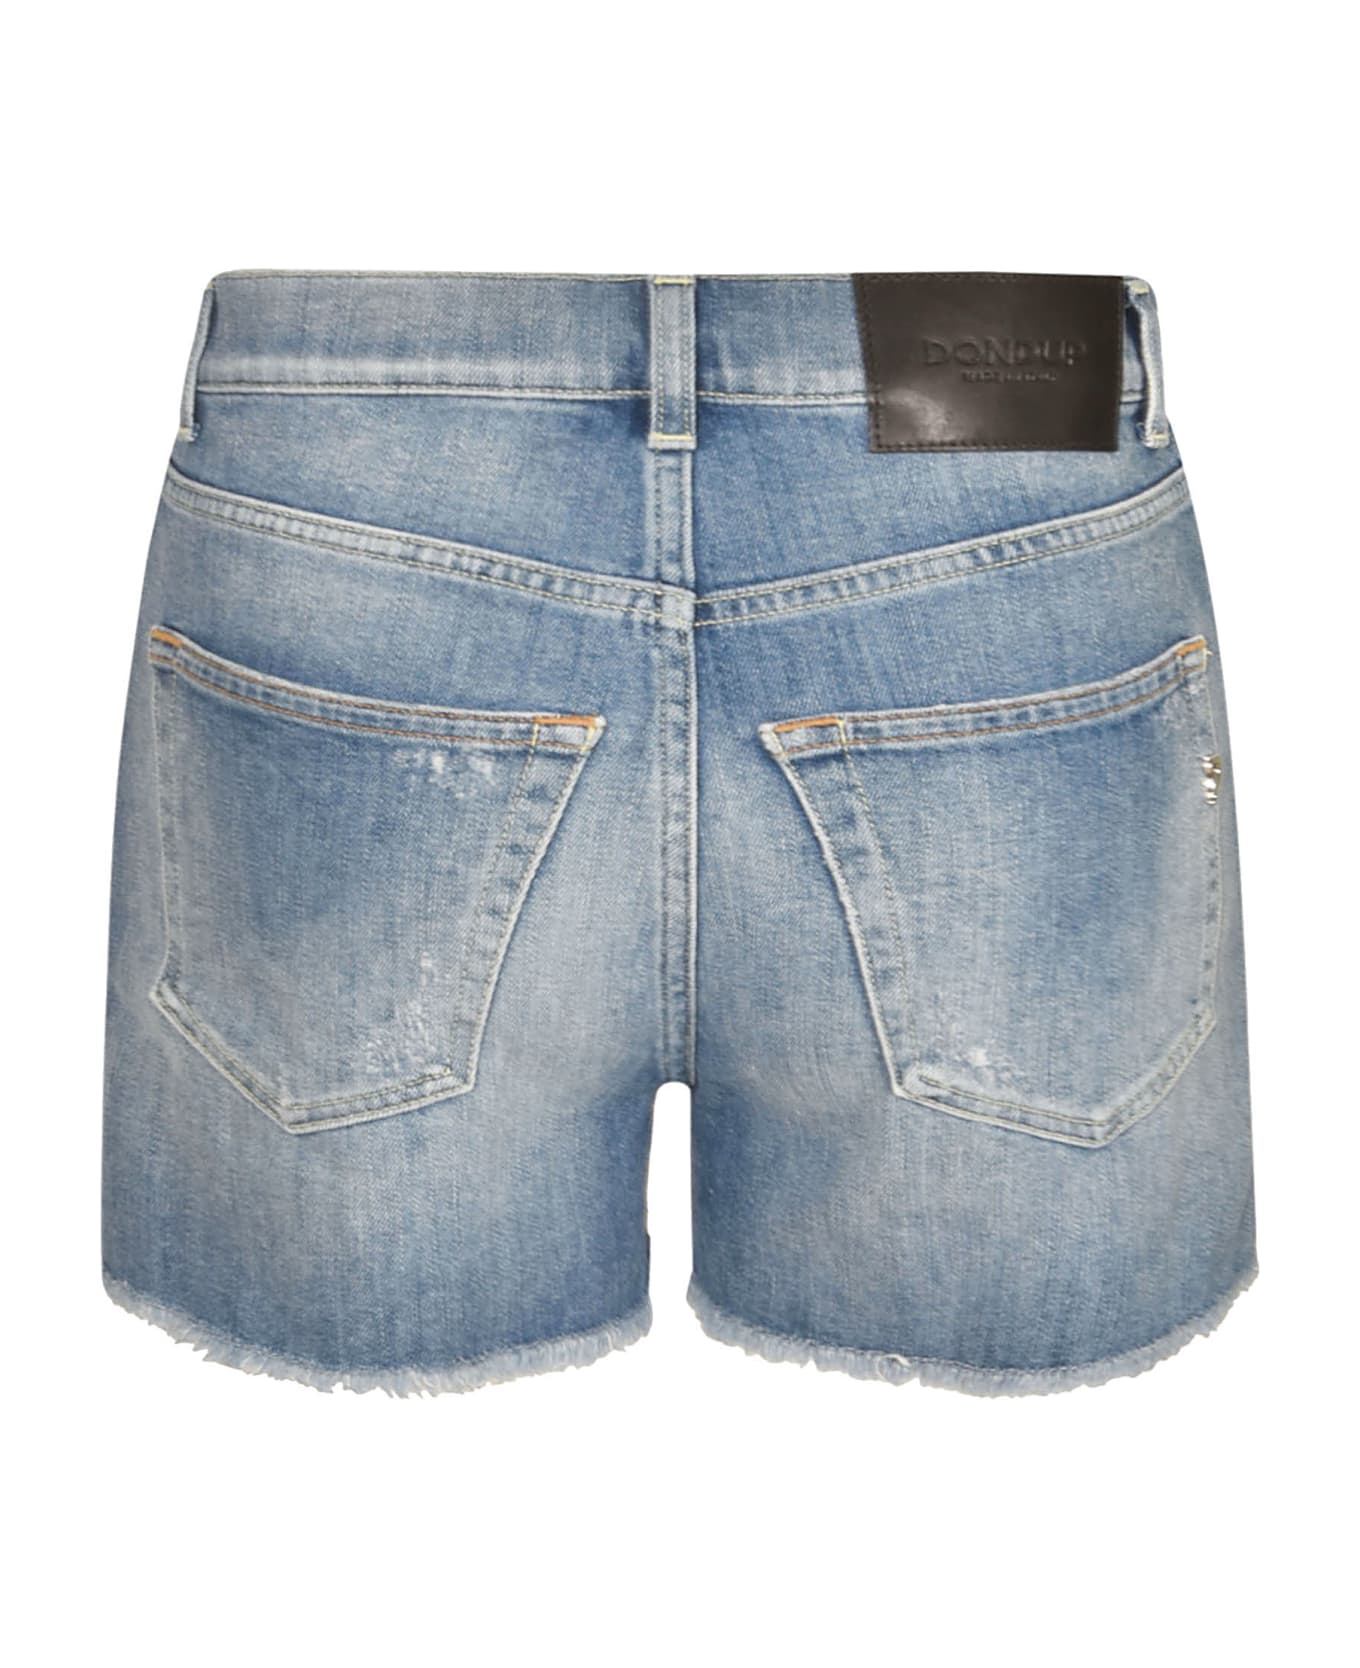 Dondup Denim Buttoned Shorts - 800